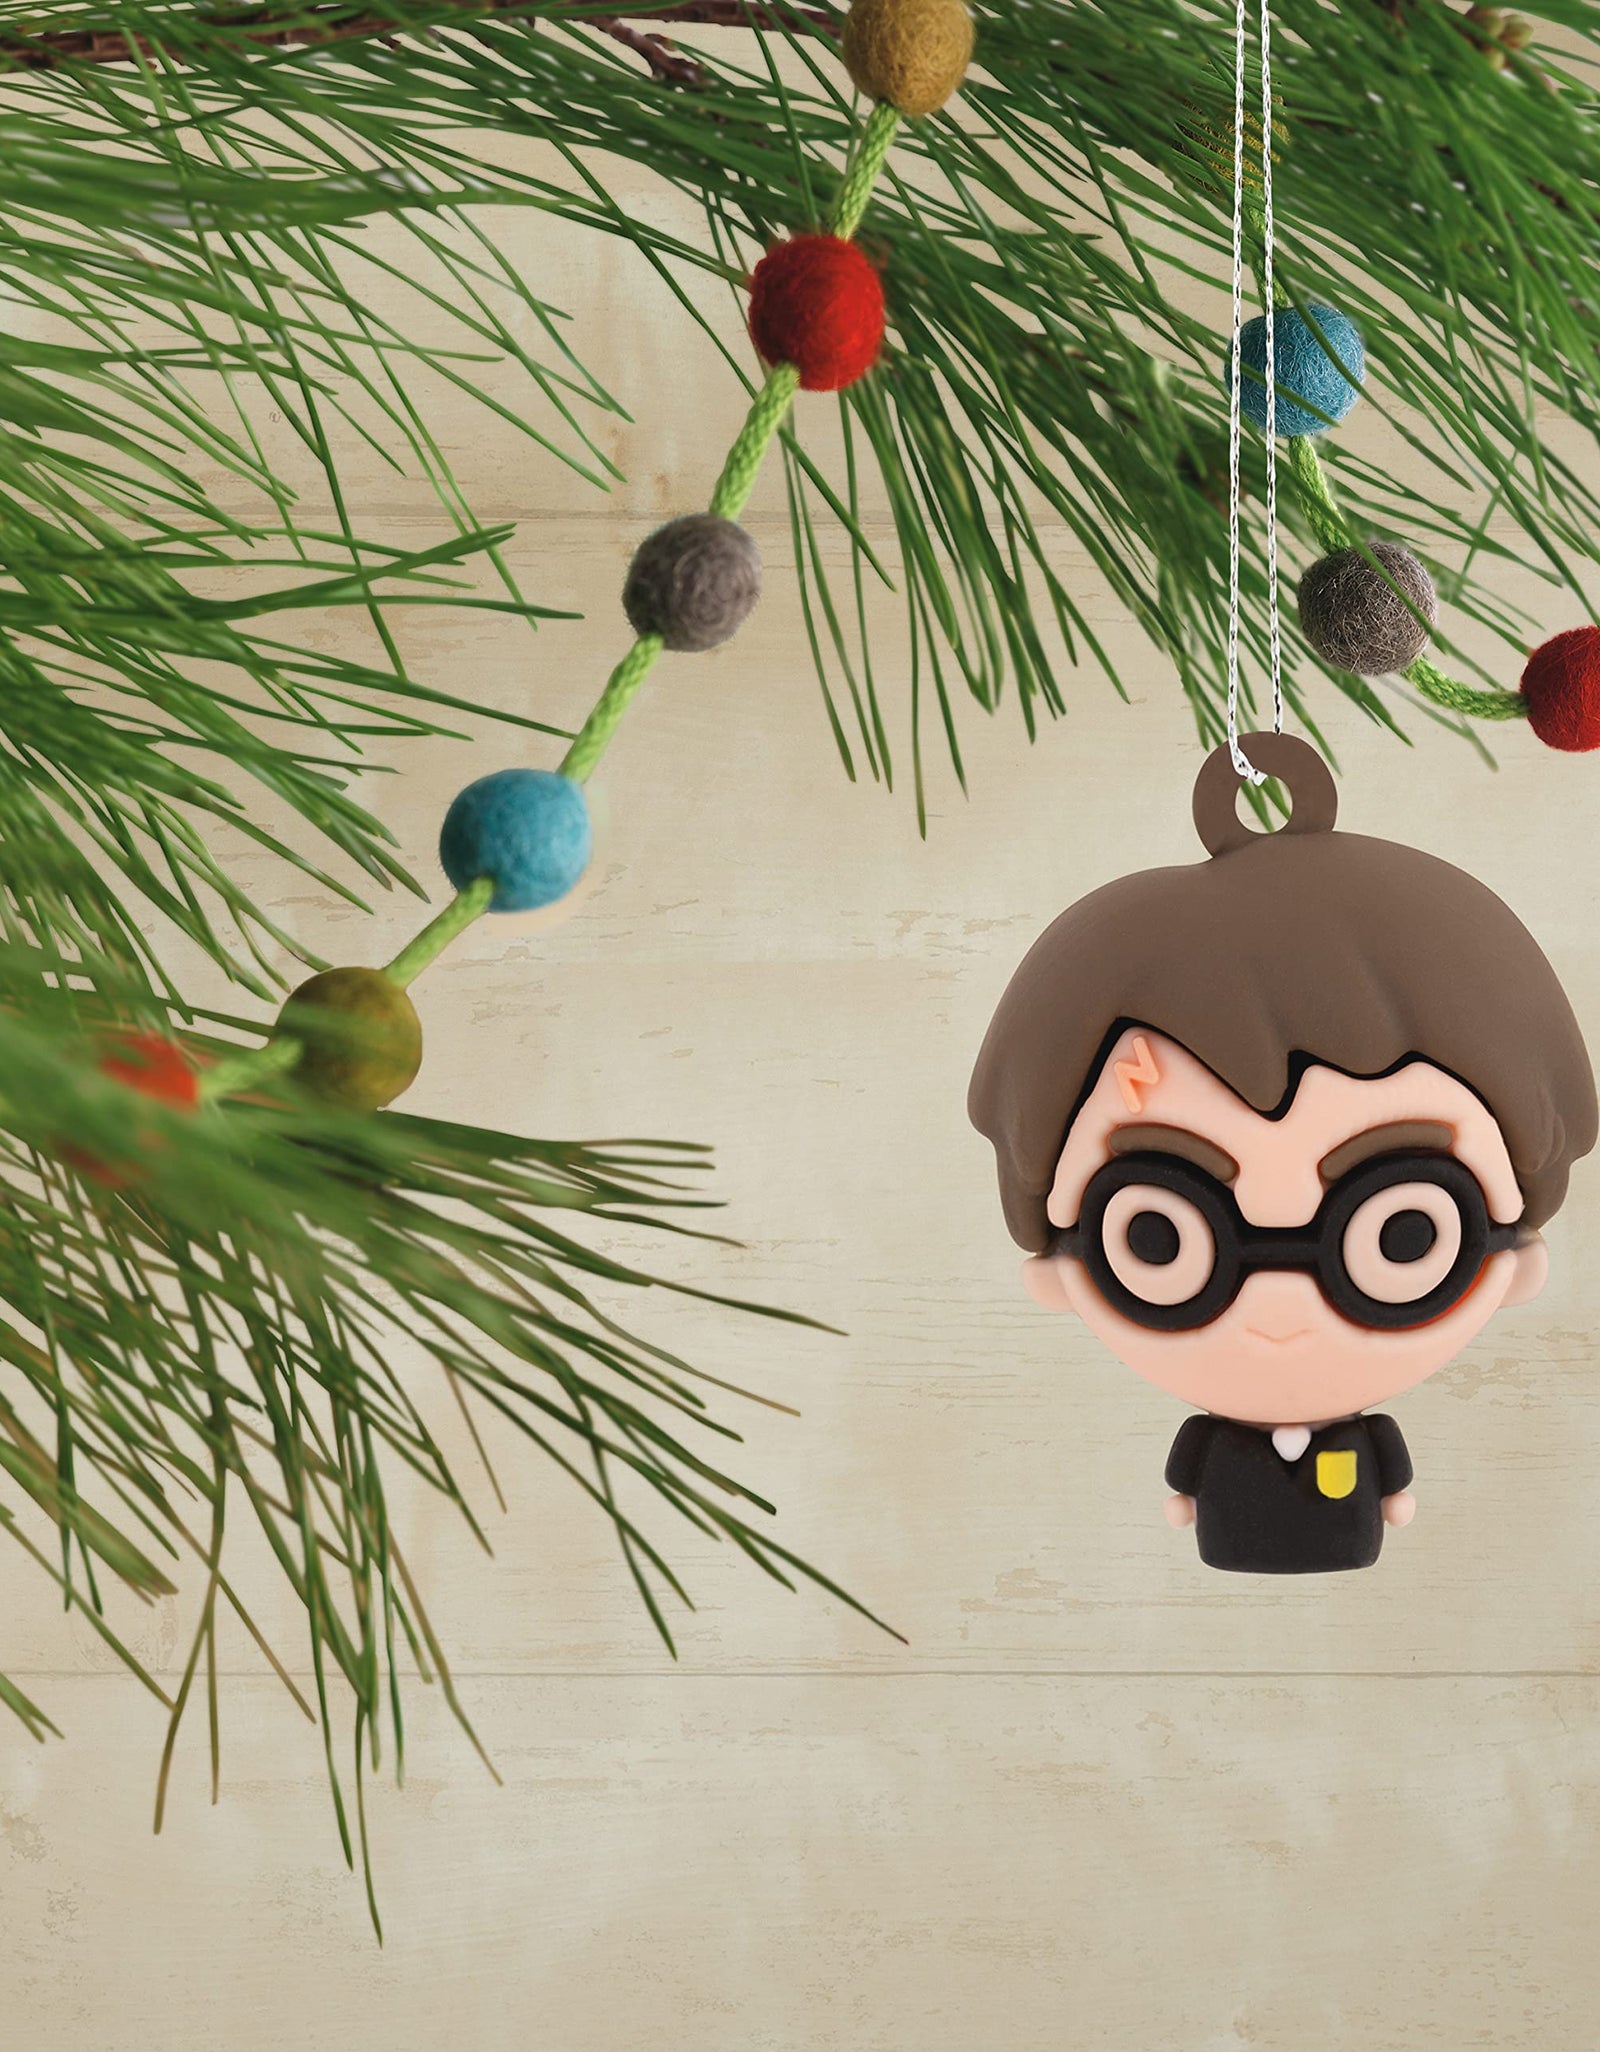 Hallmark Harry Potter and Friends Miniature Christmas Ornaments, Mini Set of 6